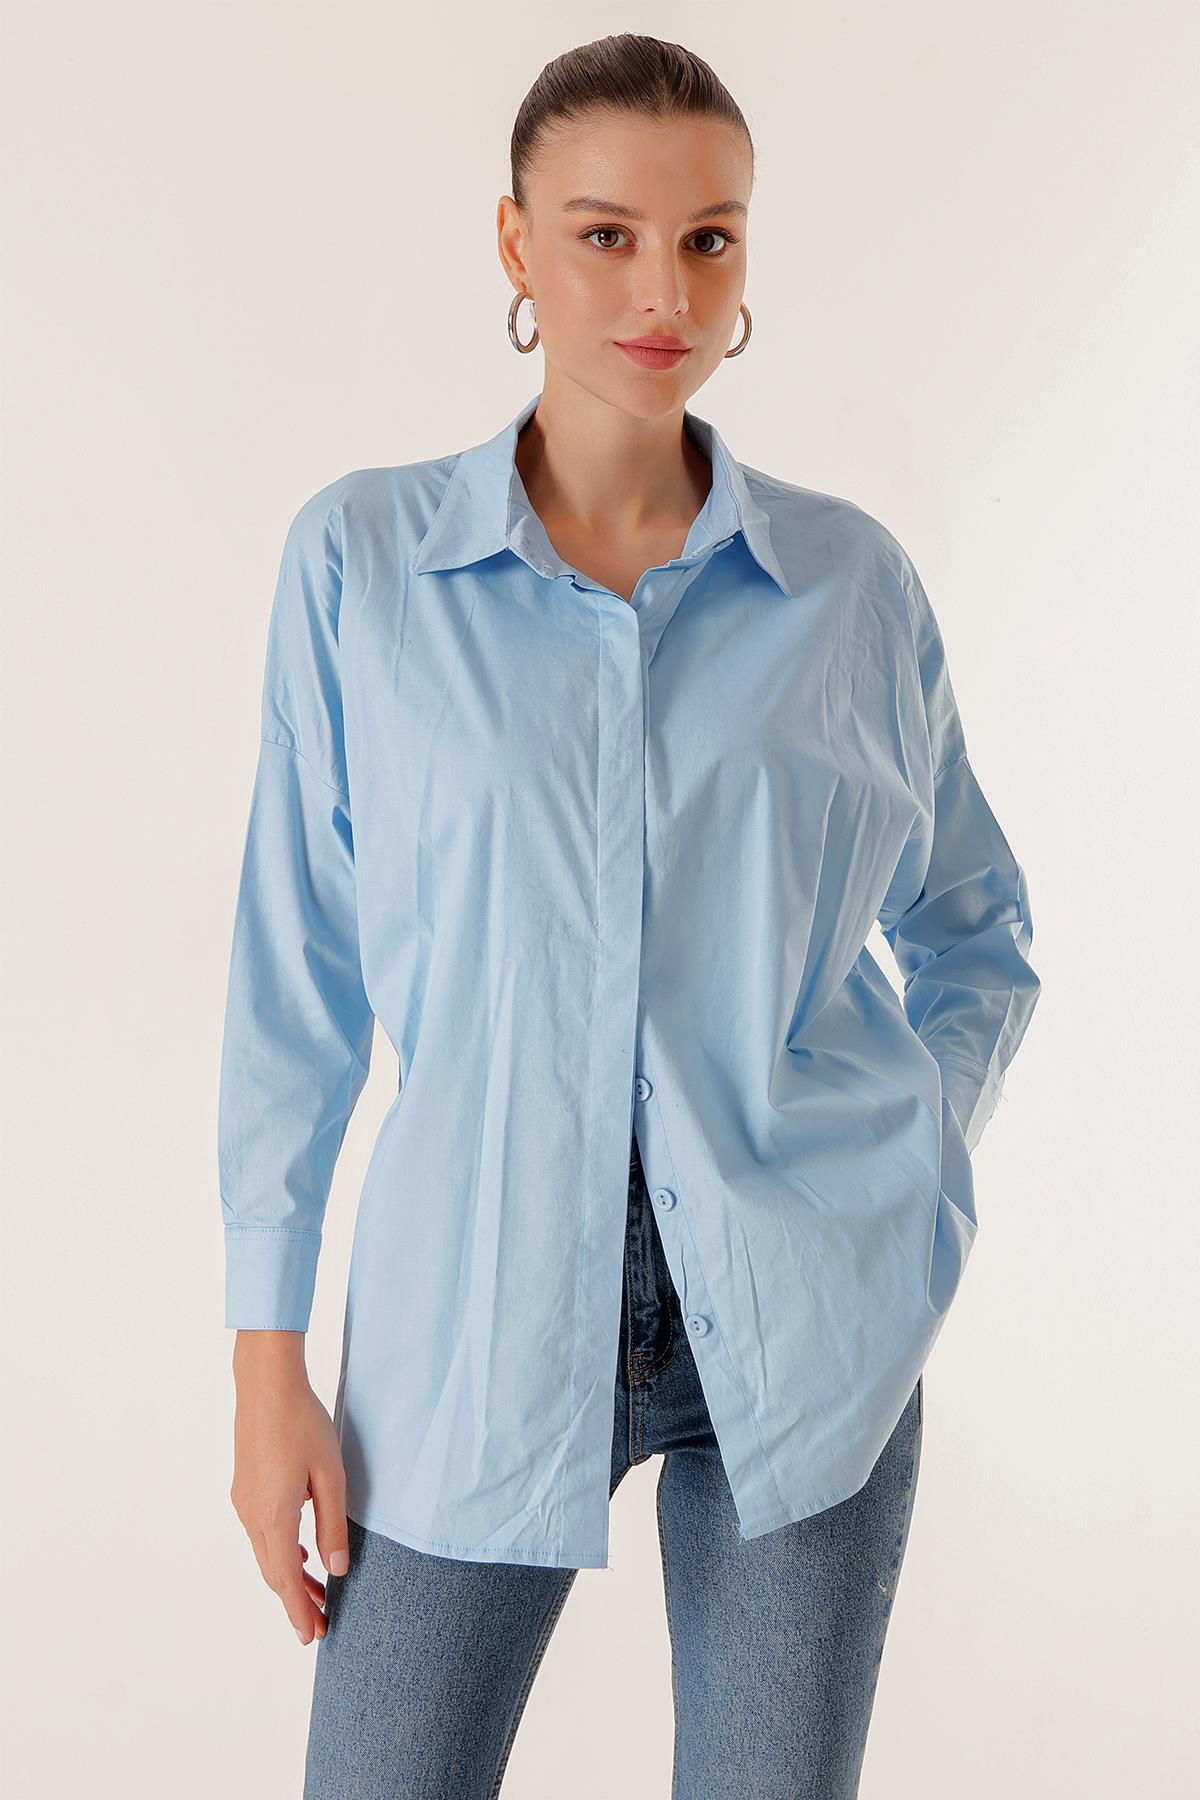 Levně By Saygı Batwing Capri Sleeve Oversize Shirt with Front Plaid